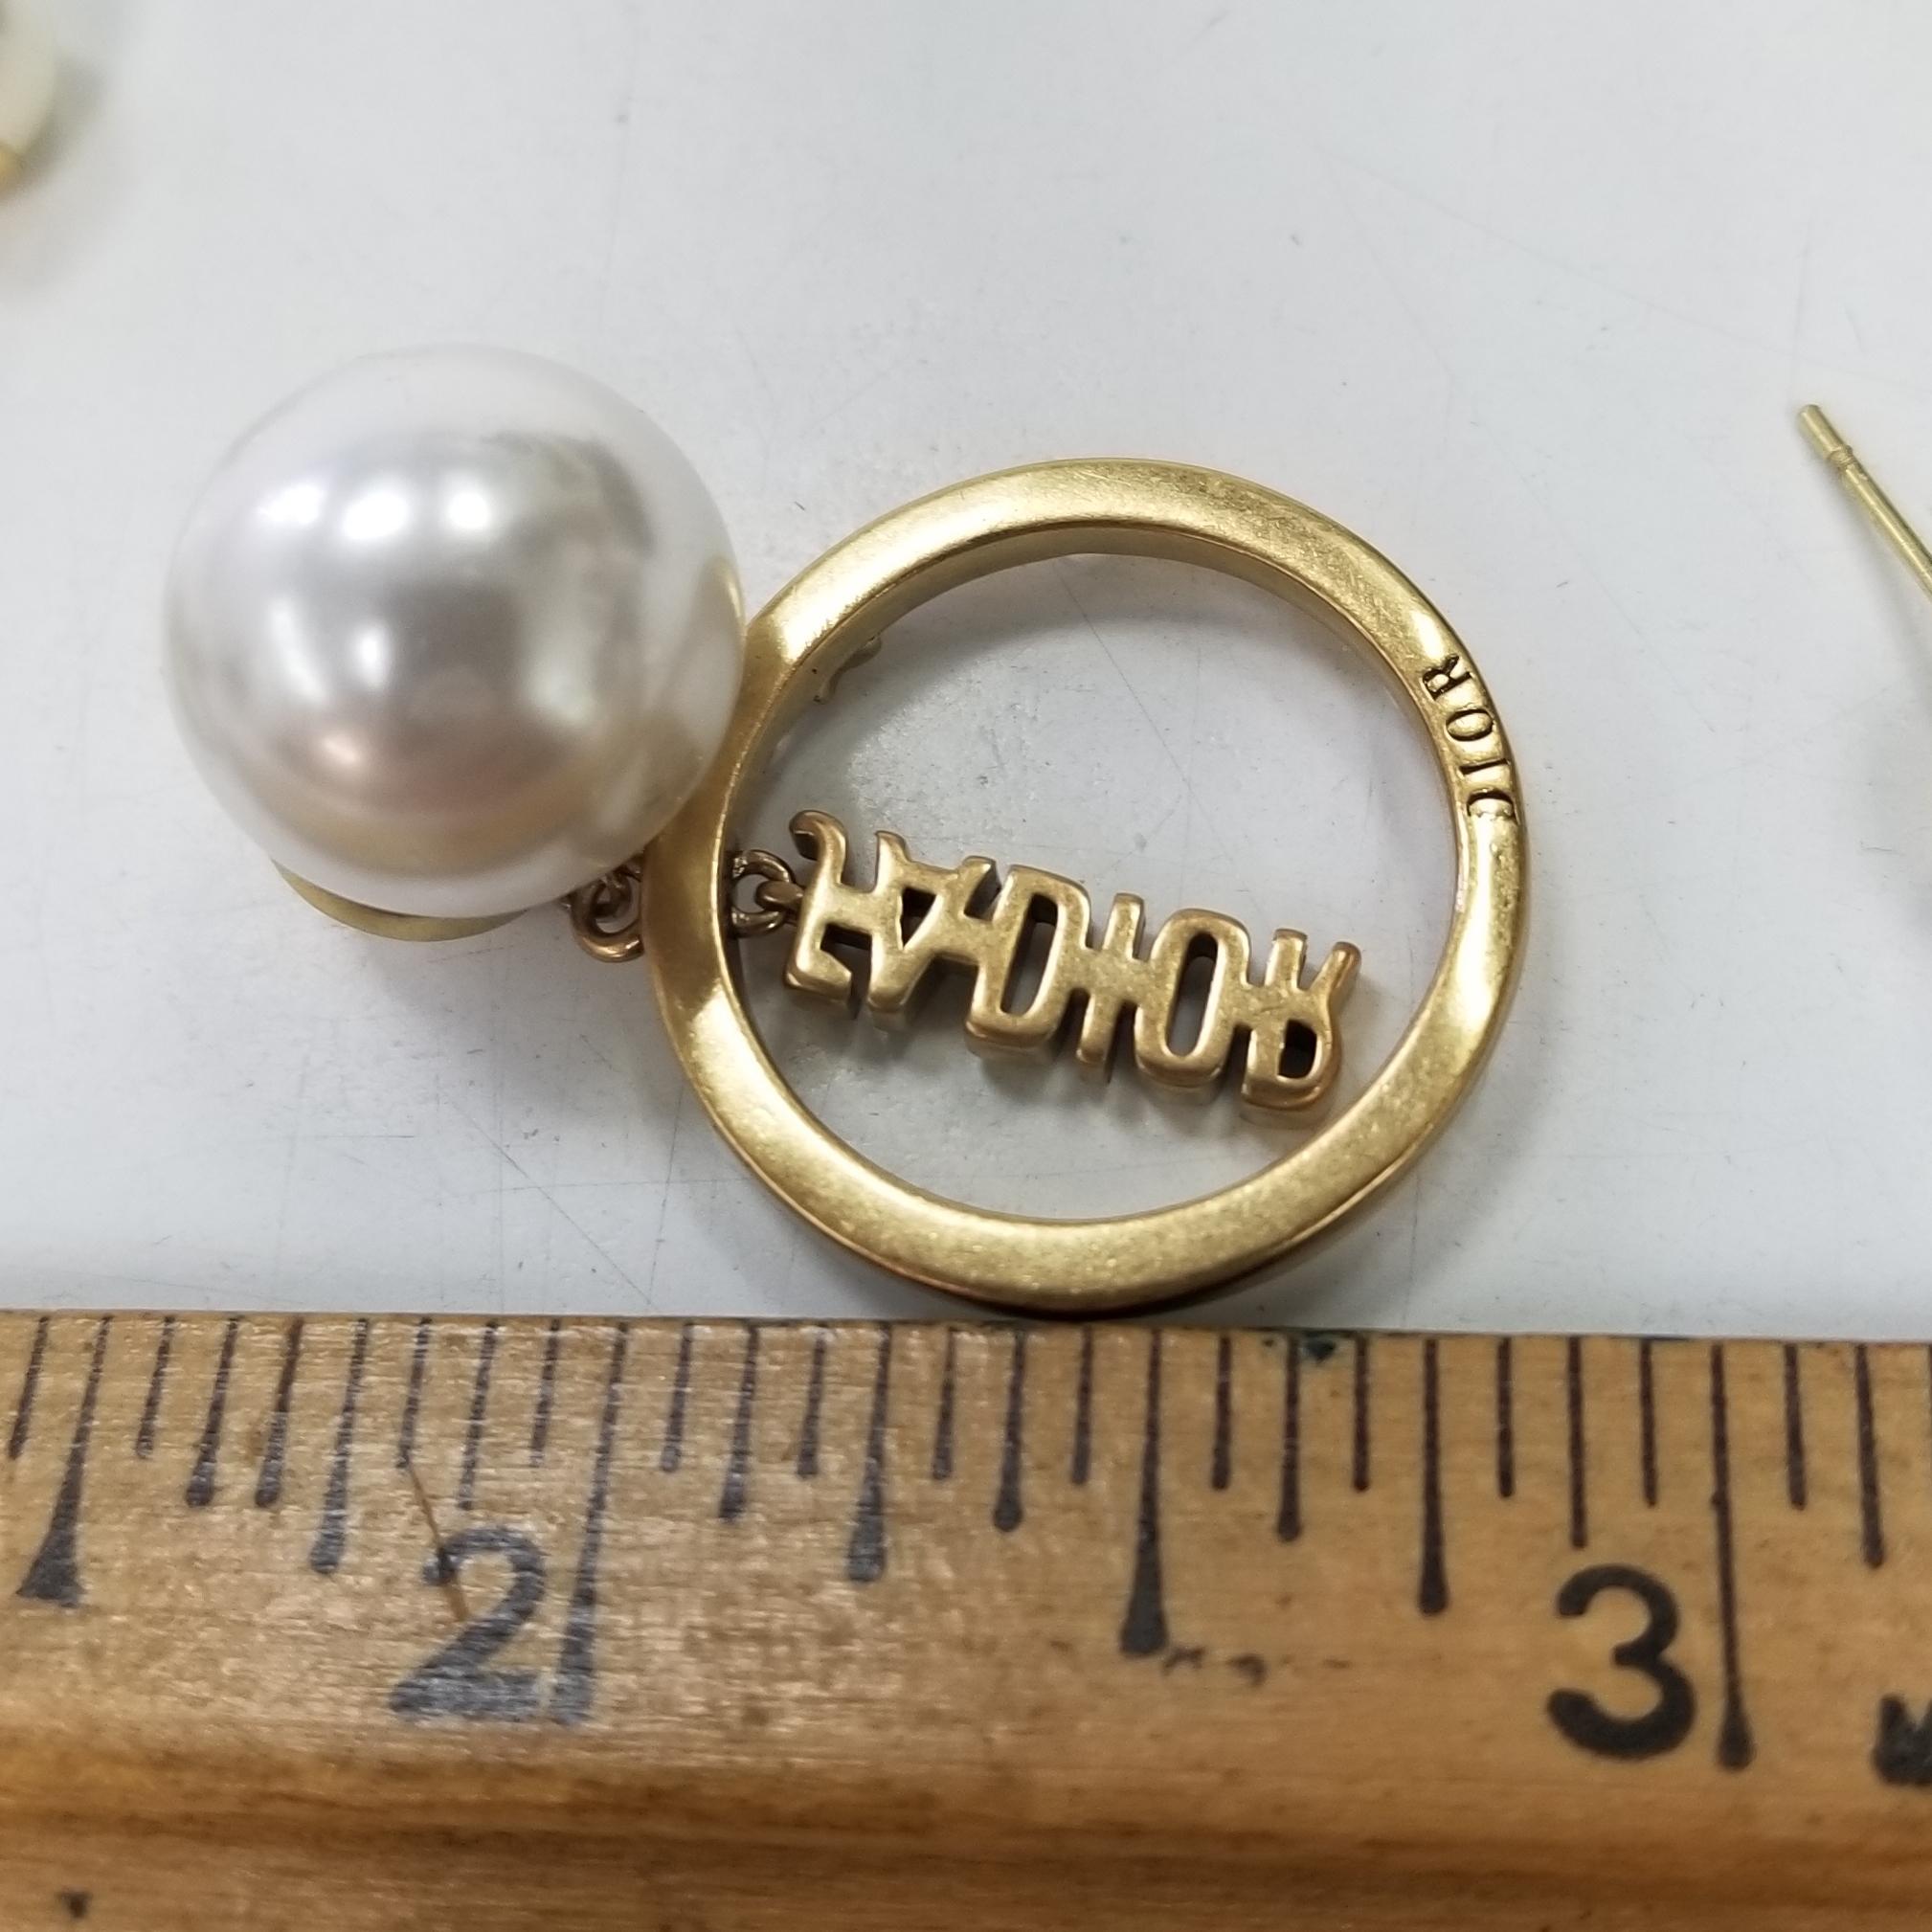 dior double pearl earrings